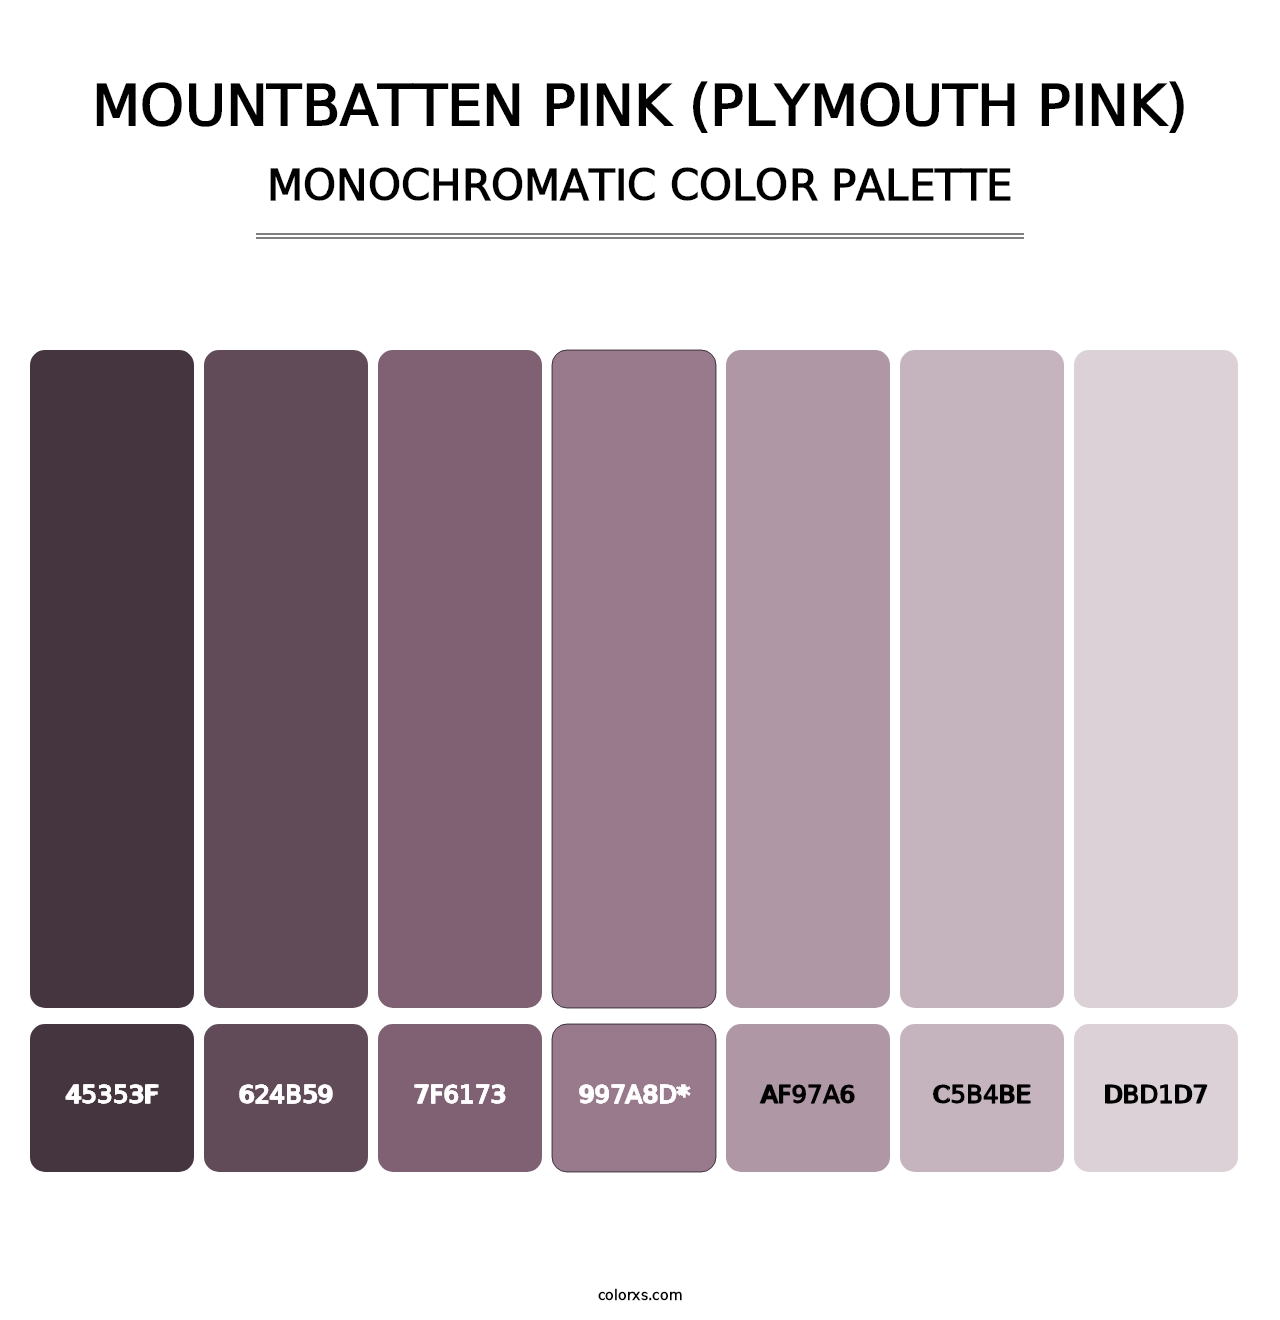 Mountbatten Pink (Plymouth Pink) - Monochromatic Color Palette